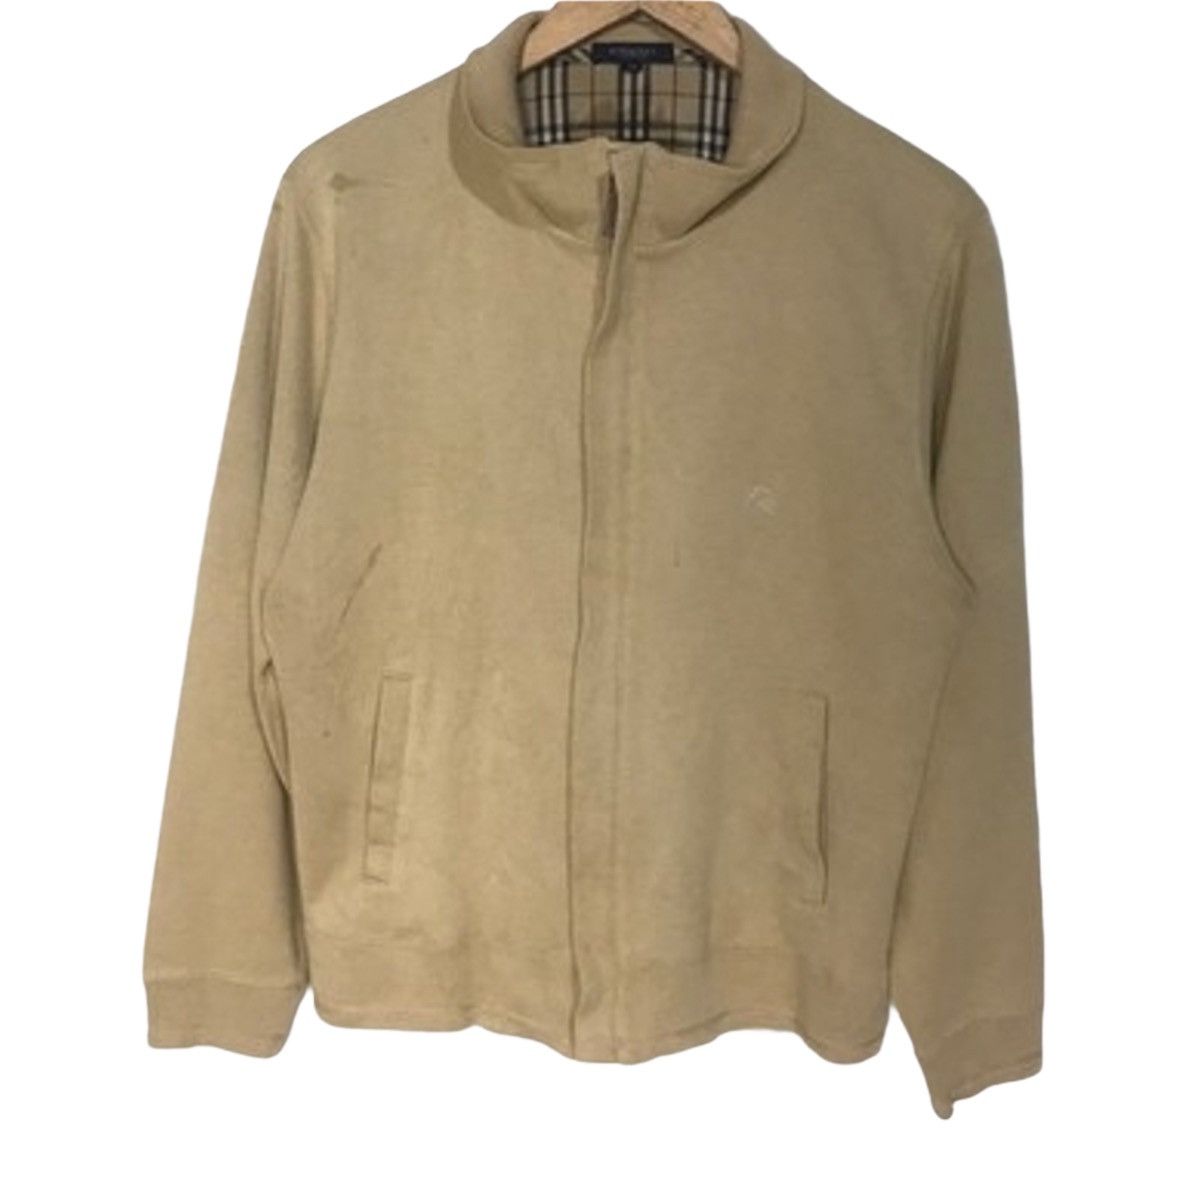 burberry nova check zipper sweater - 1